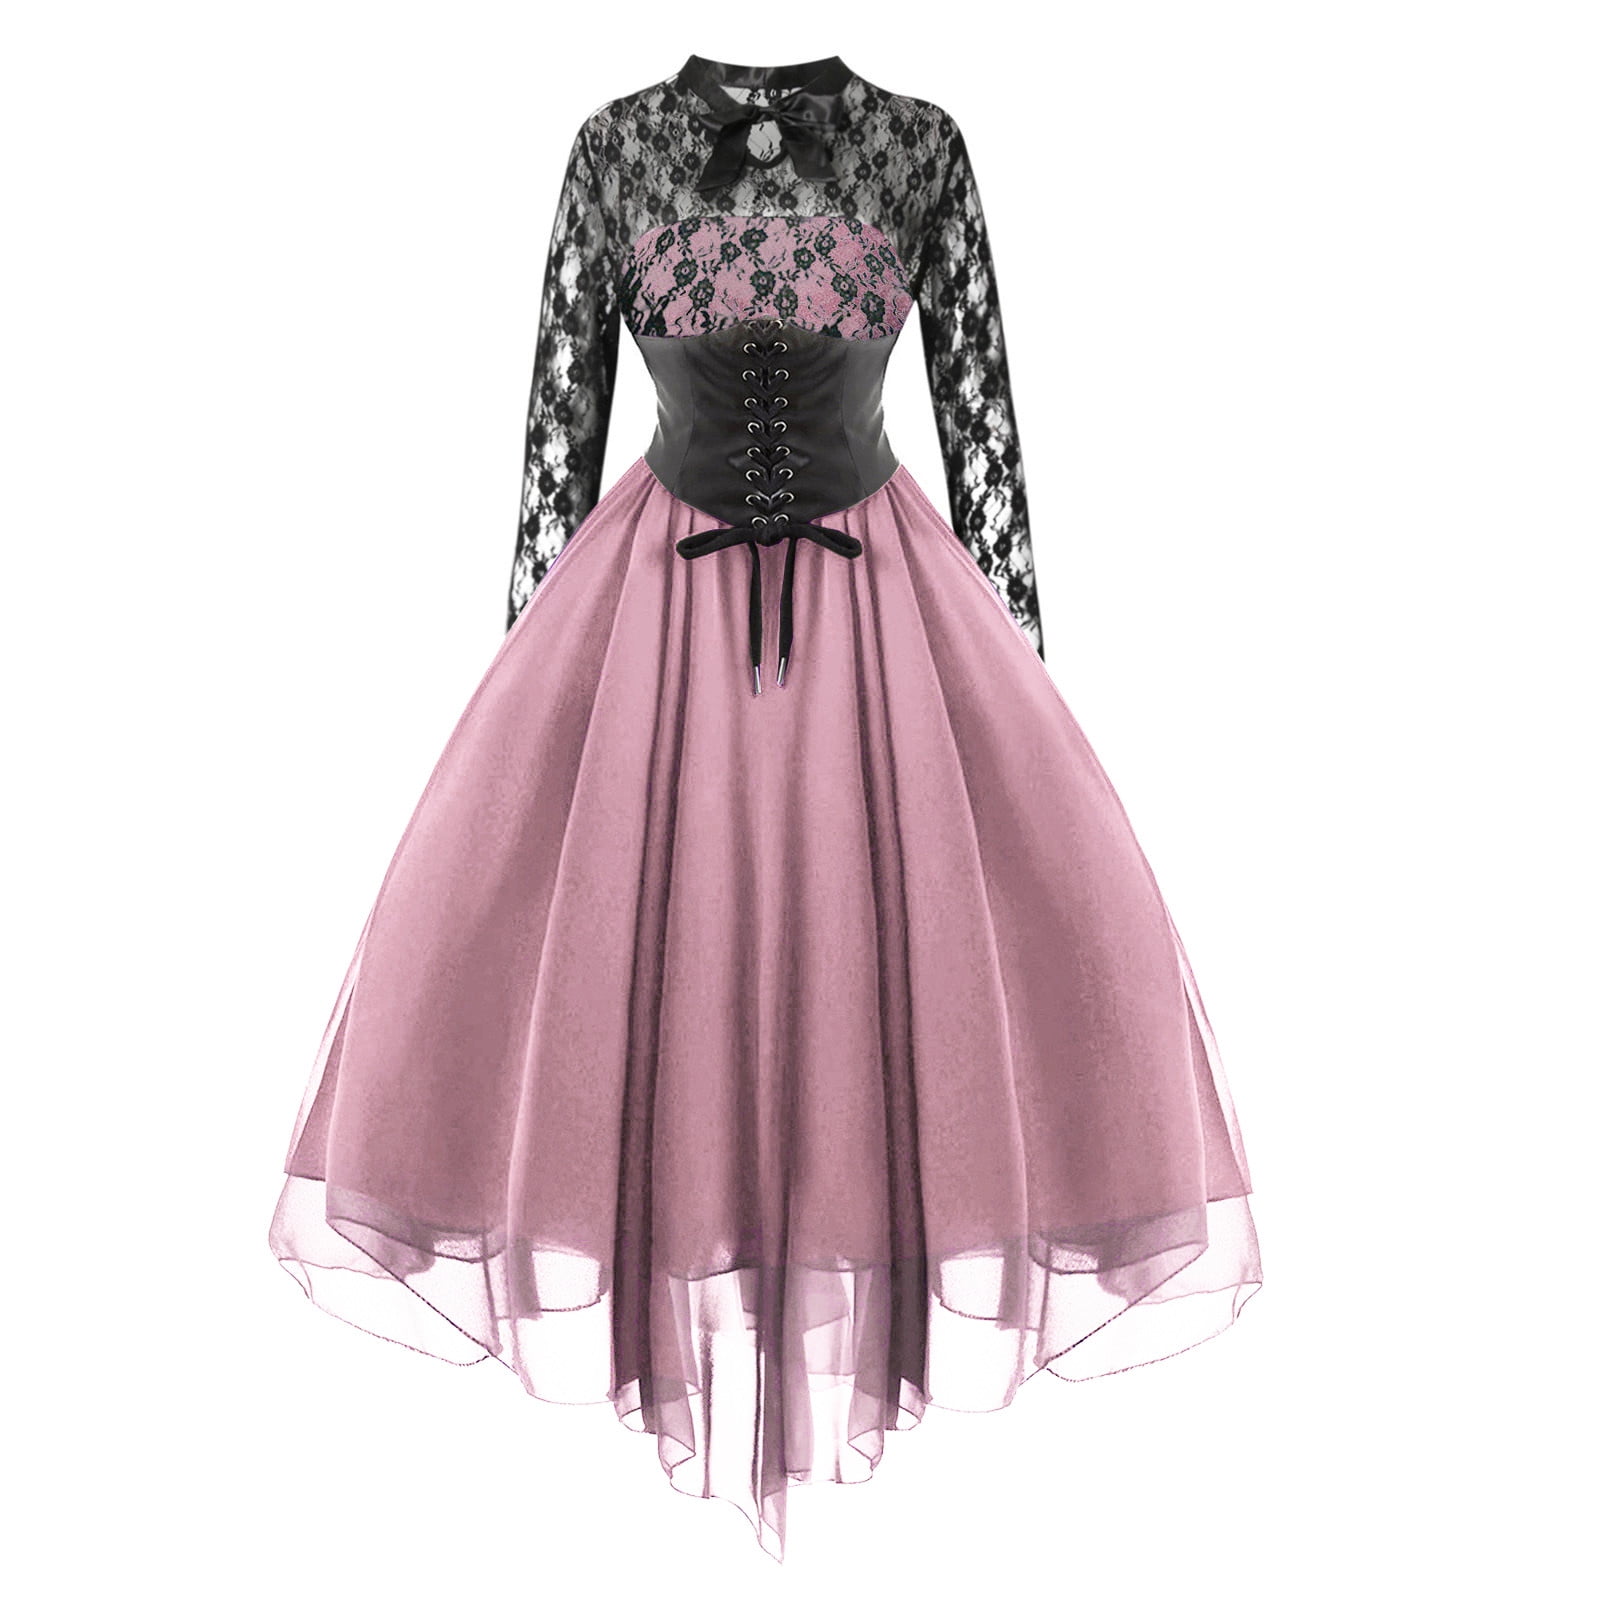 YYDGH Women Gothic Dress with Corset Floral Lace Long Sleeve Corset  Cocktail Mesh Swing Dress Handkerchief Hem Punk Hippie Dress Pink L